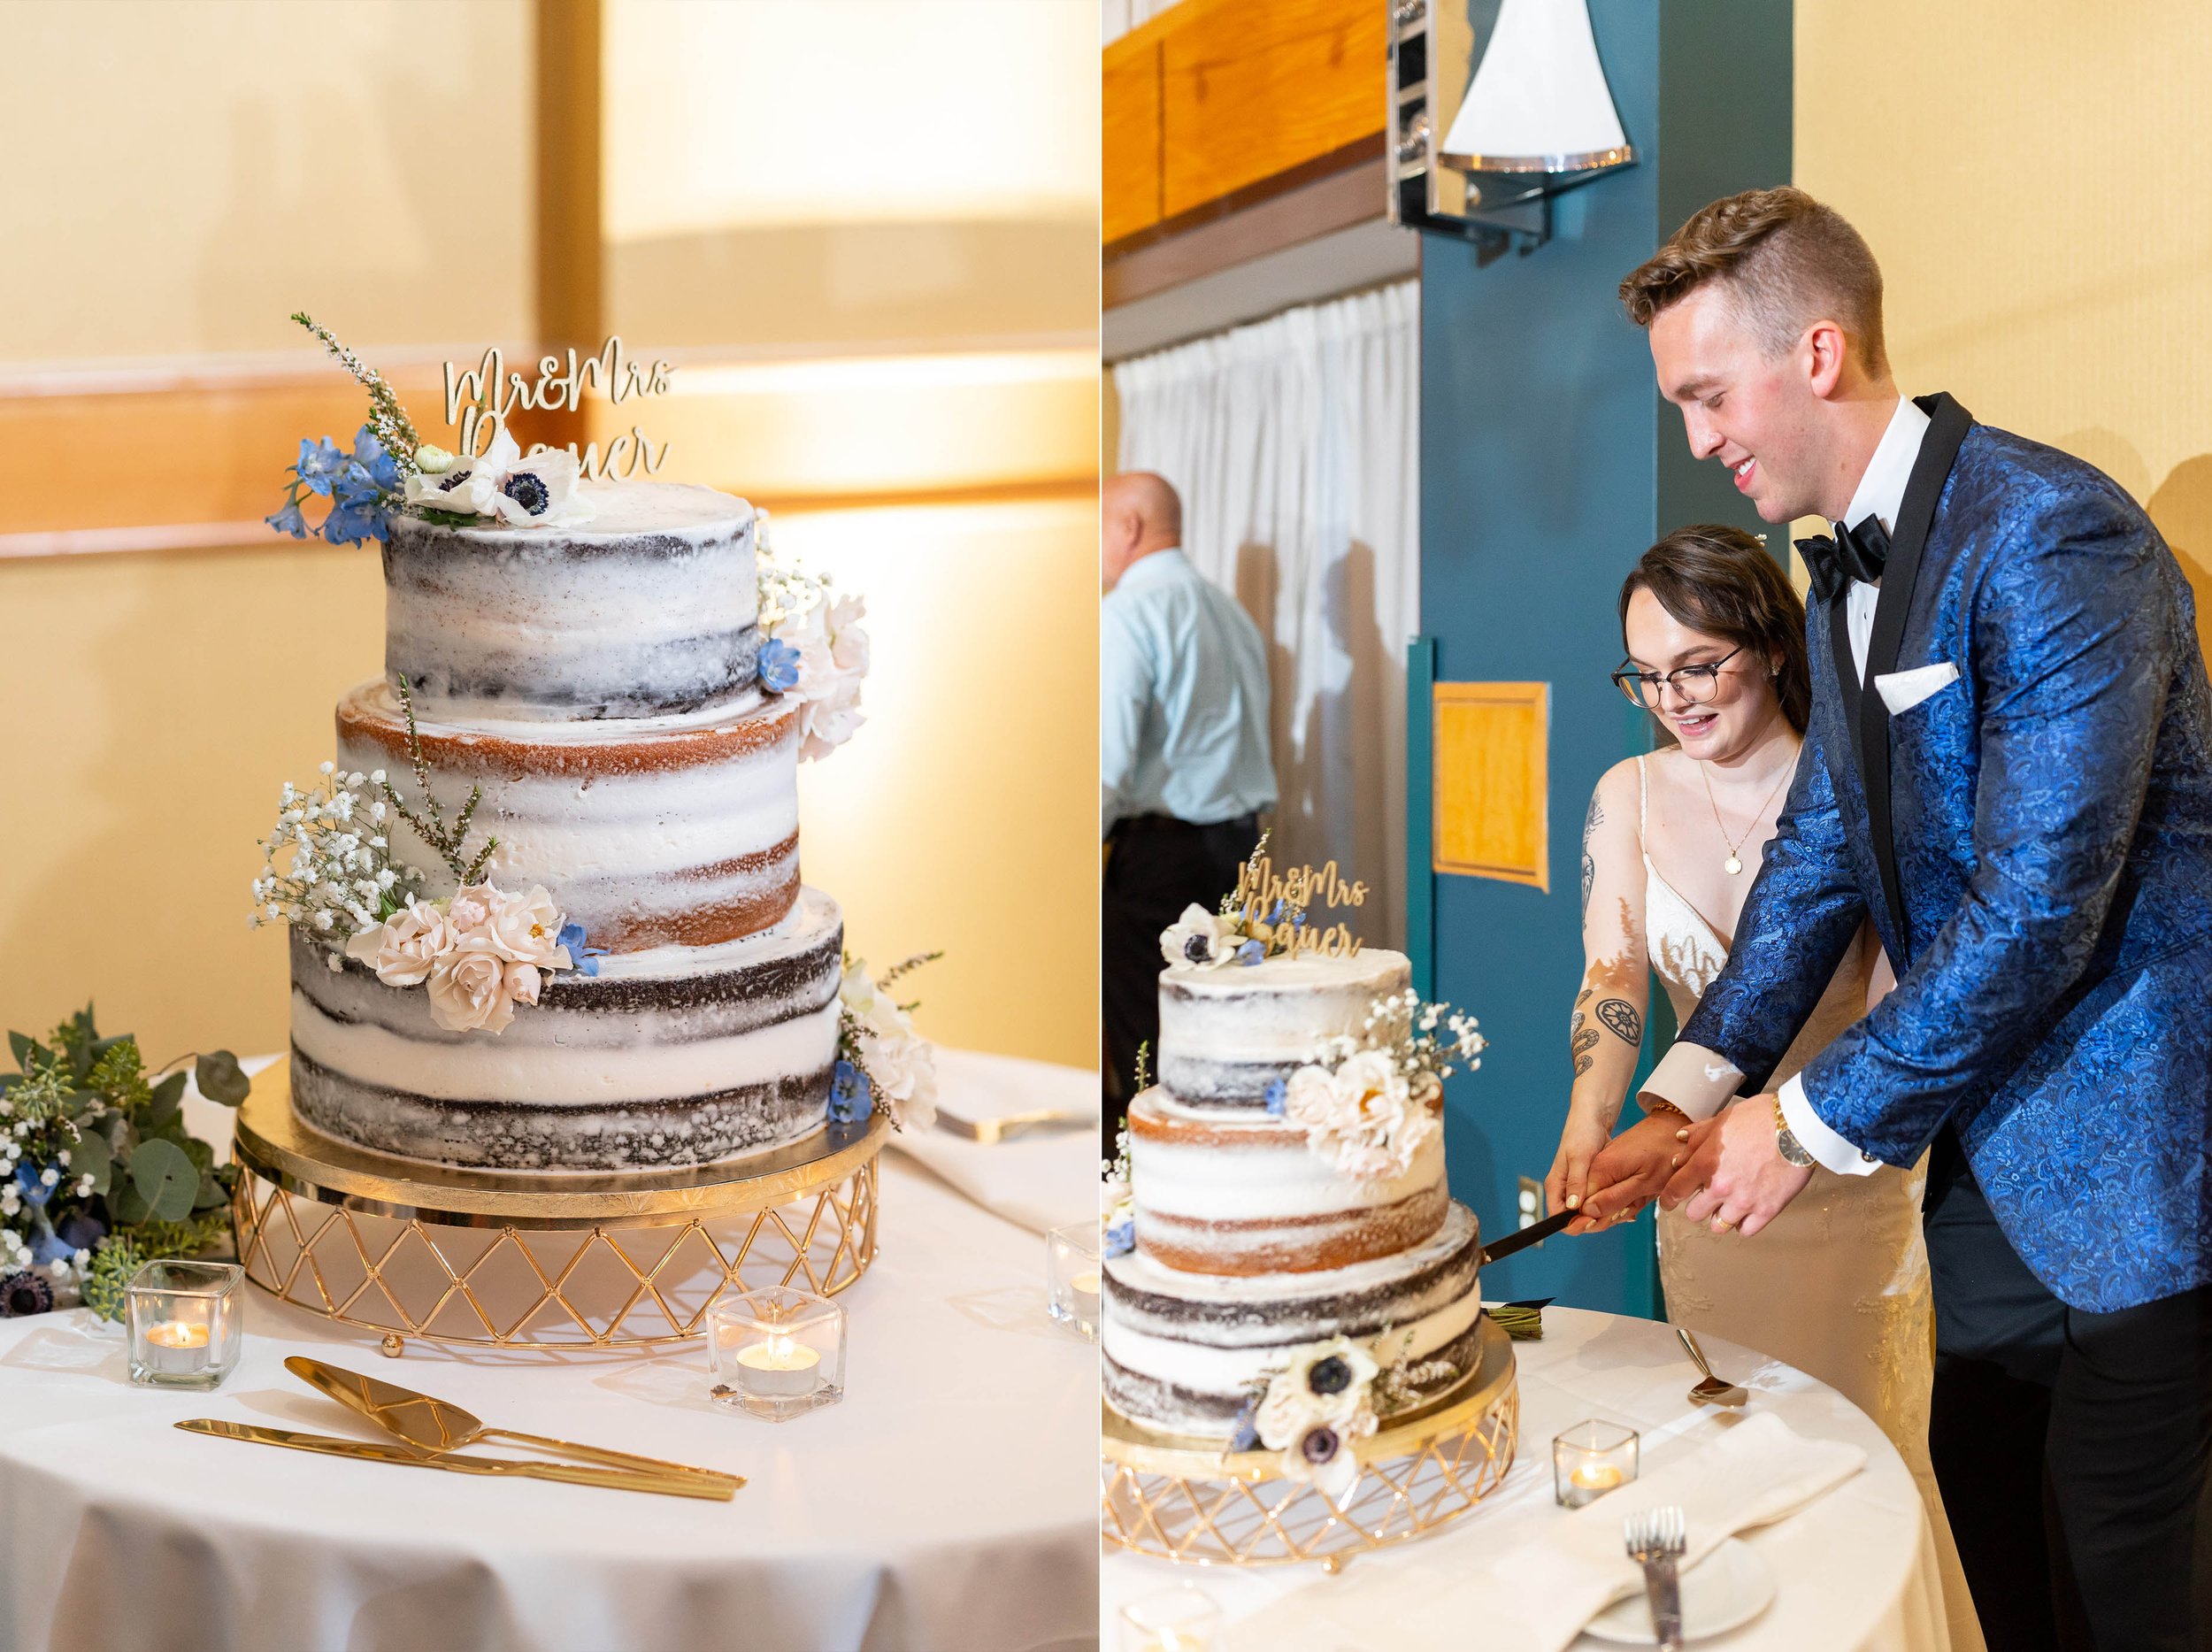 Cake cutting photos at wedding reception at Hyatt Regency Chesapeake